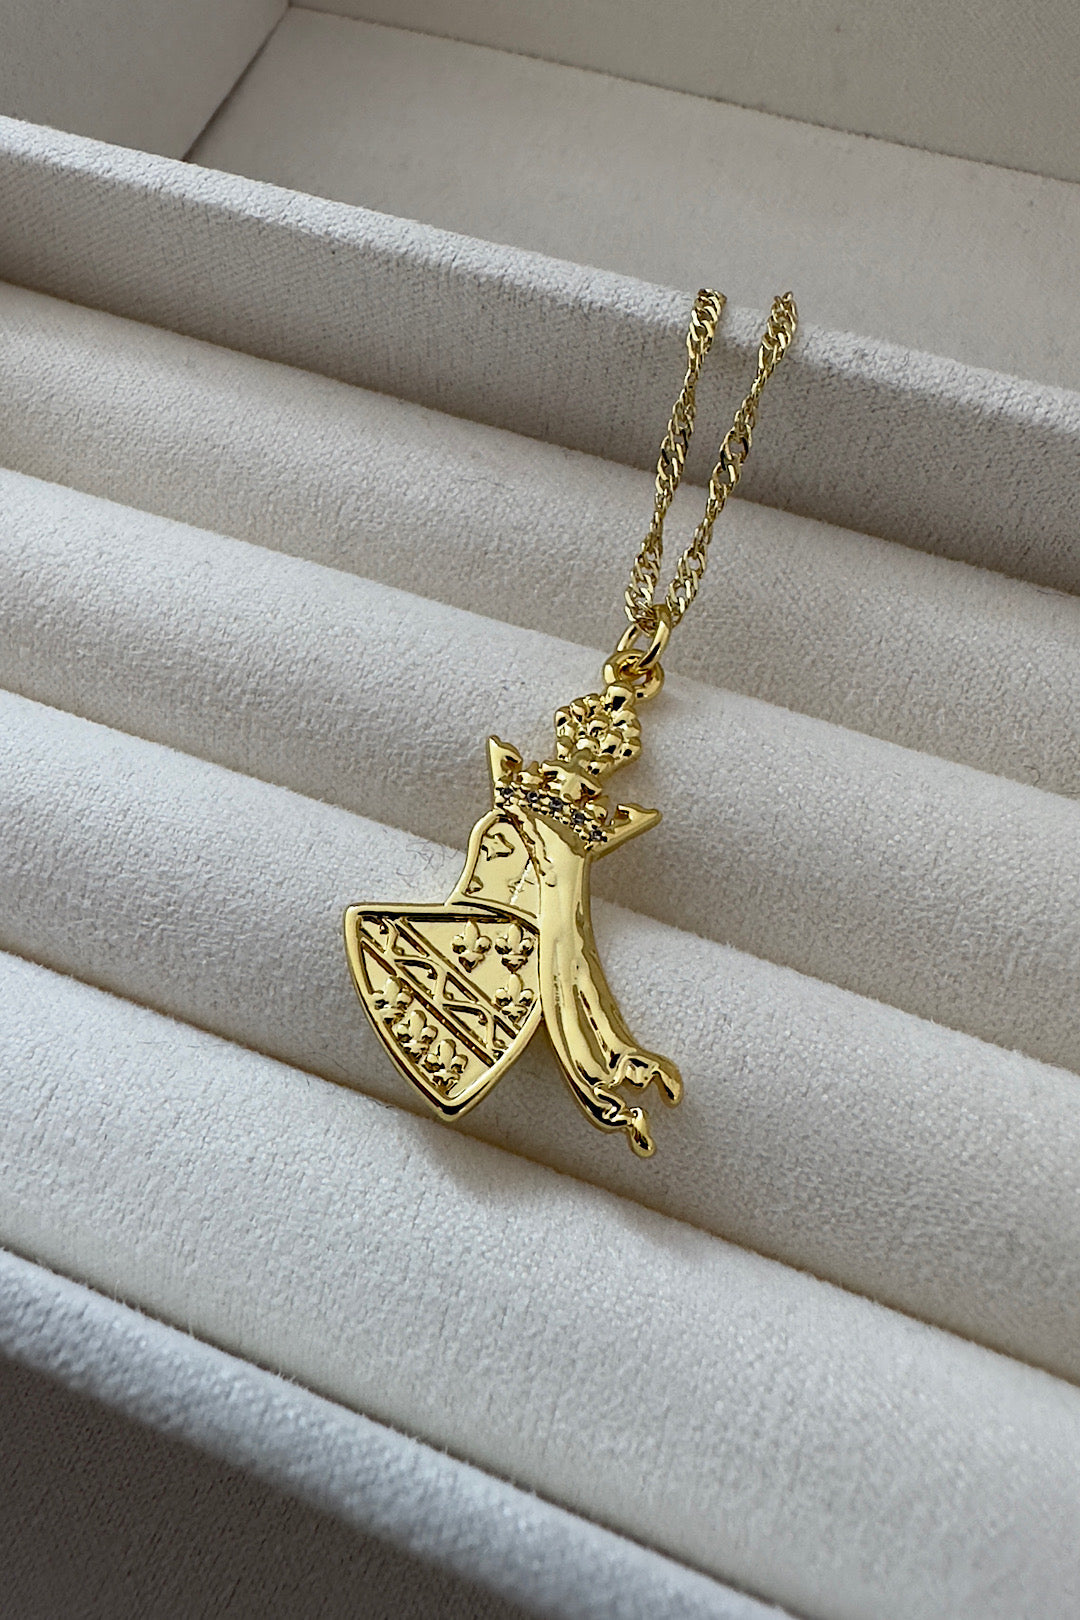 Kingdom Of Bosnia Gold Swirl Necklace 